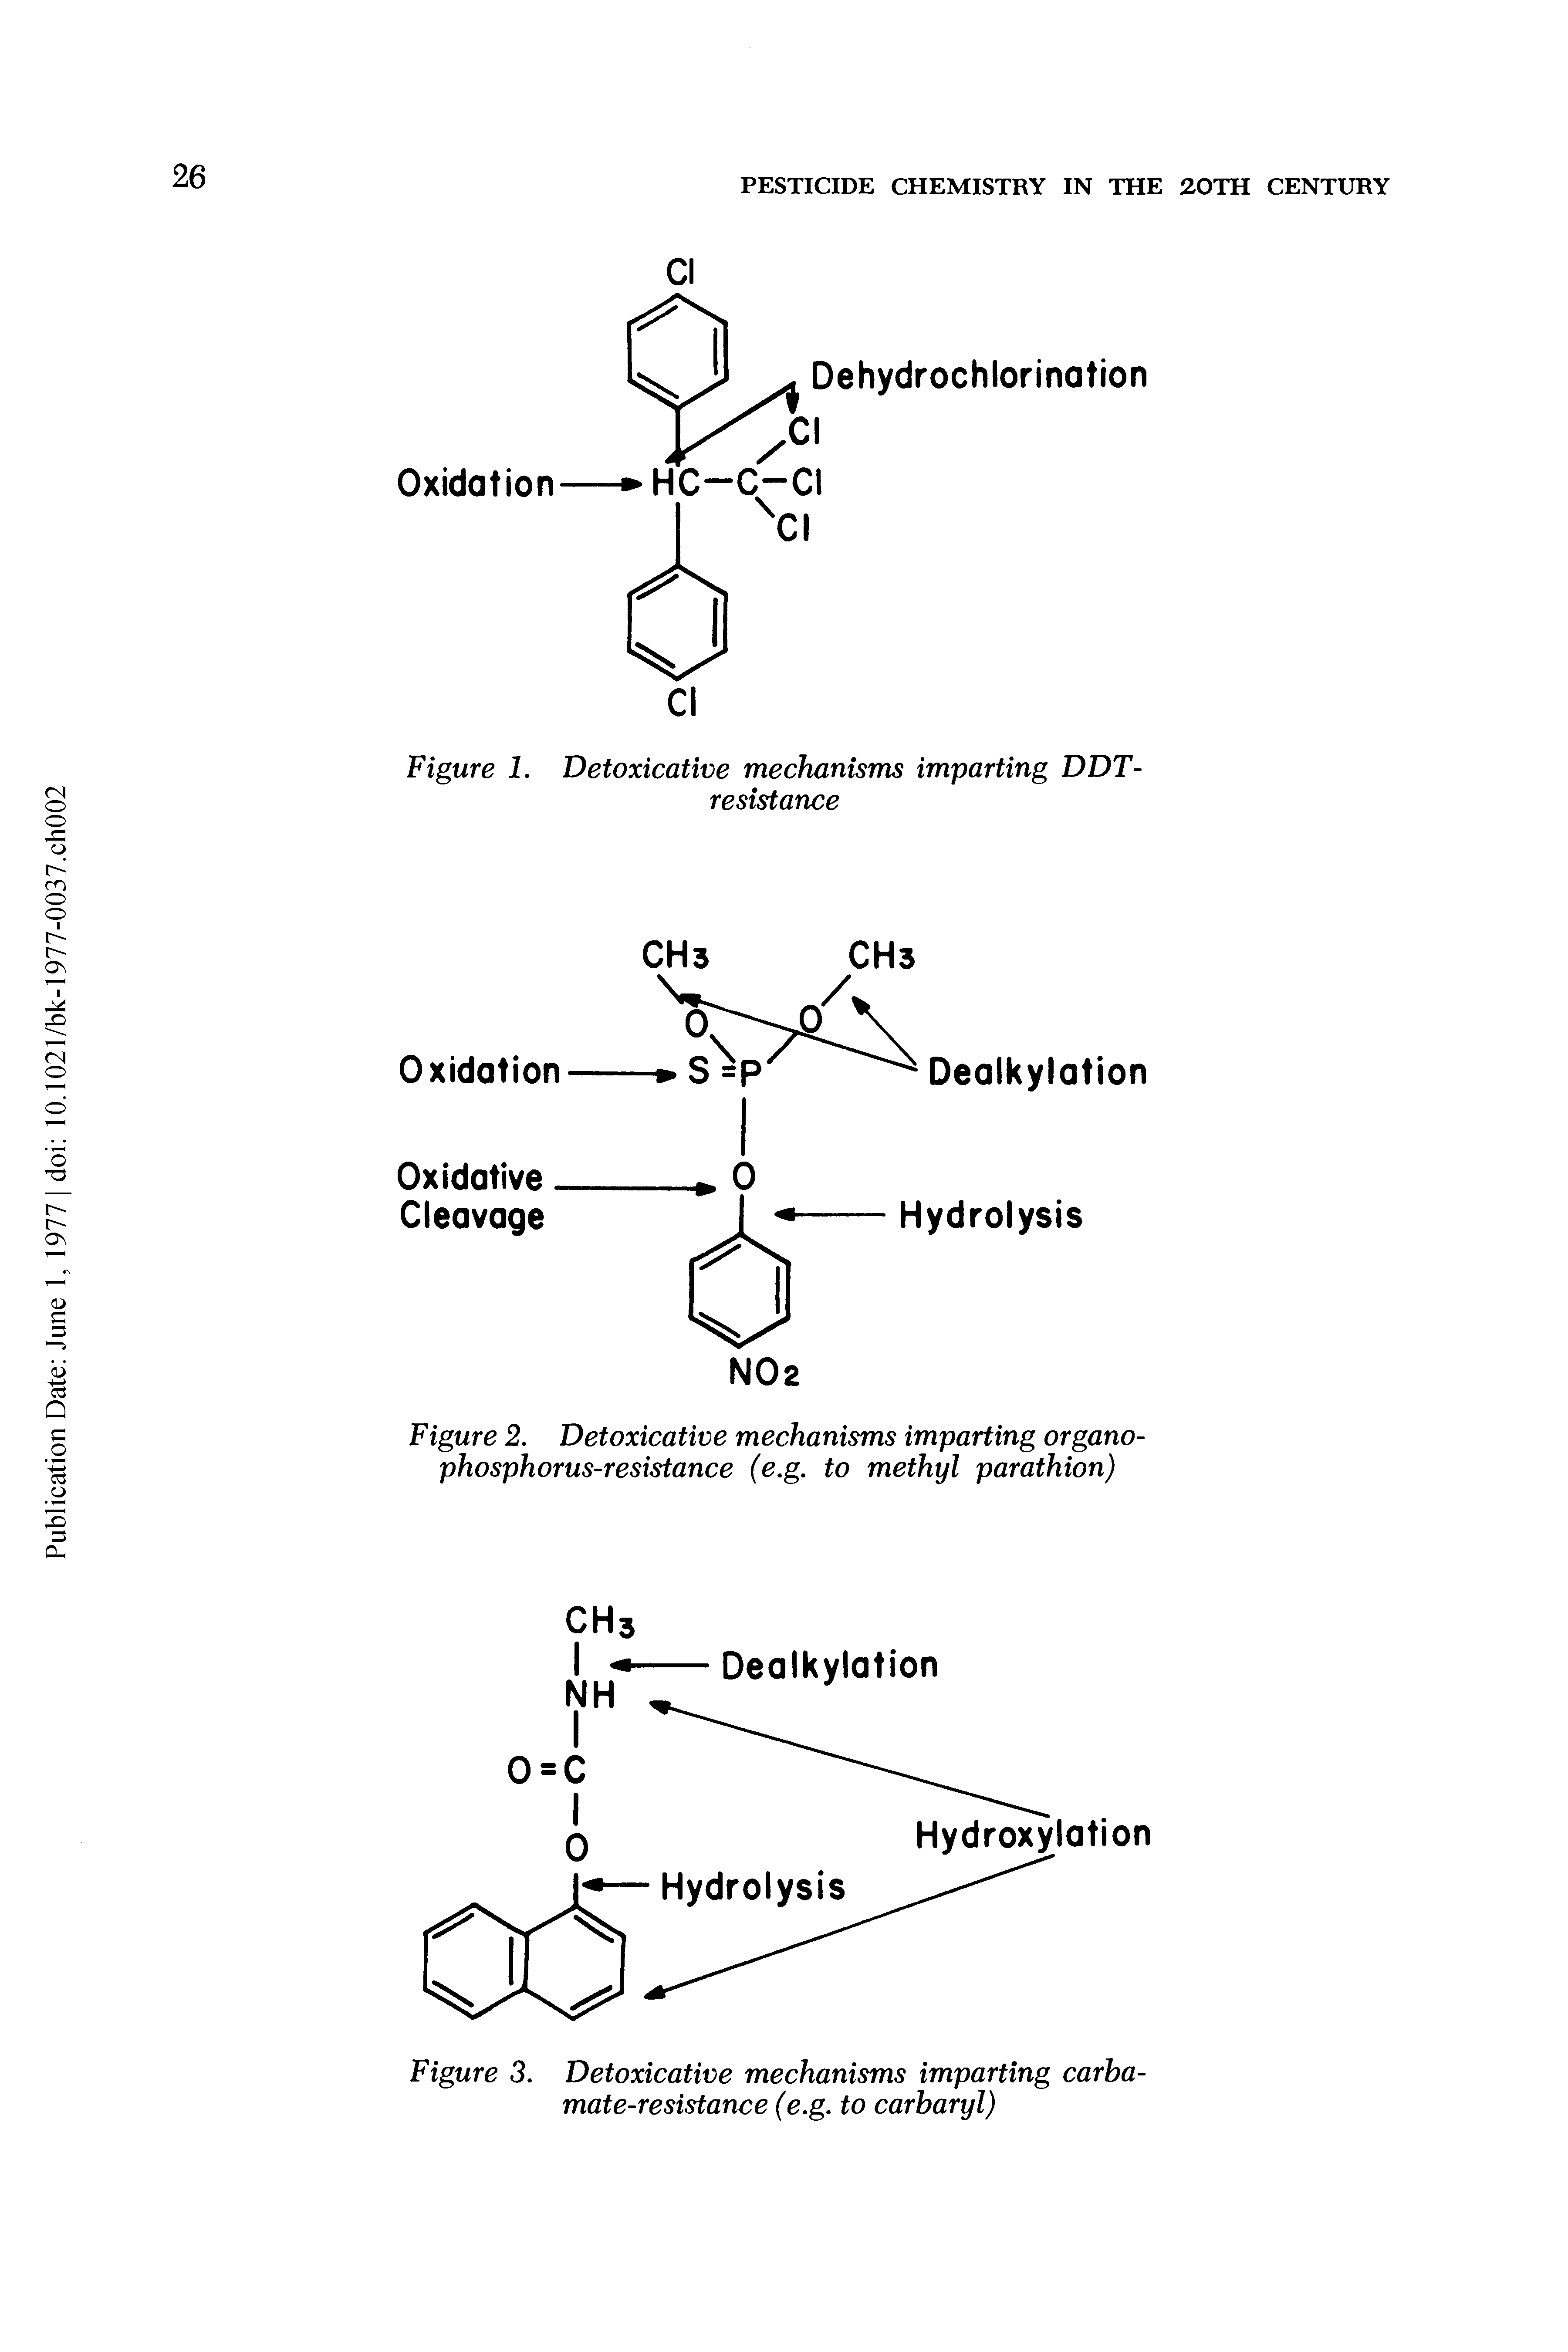 Figure 2. Detoxicative mechanisms imparting organo-phosphorus-resistance (e.g. to methyl parathion)...